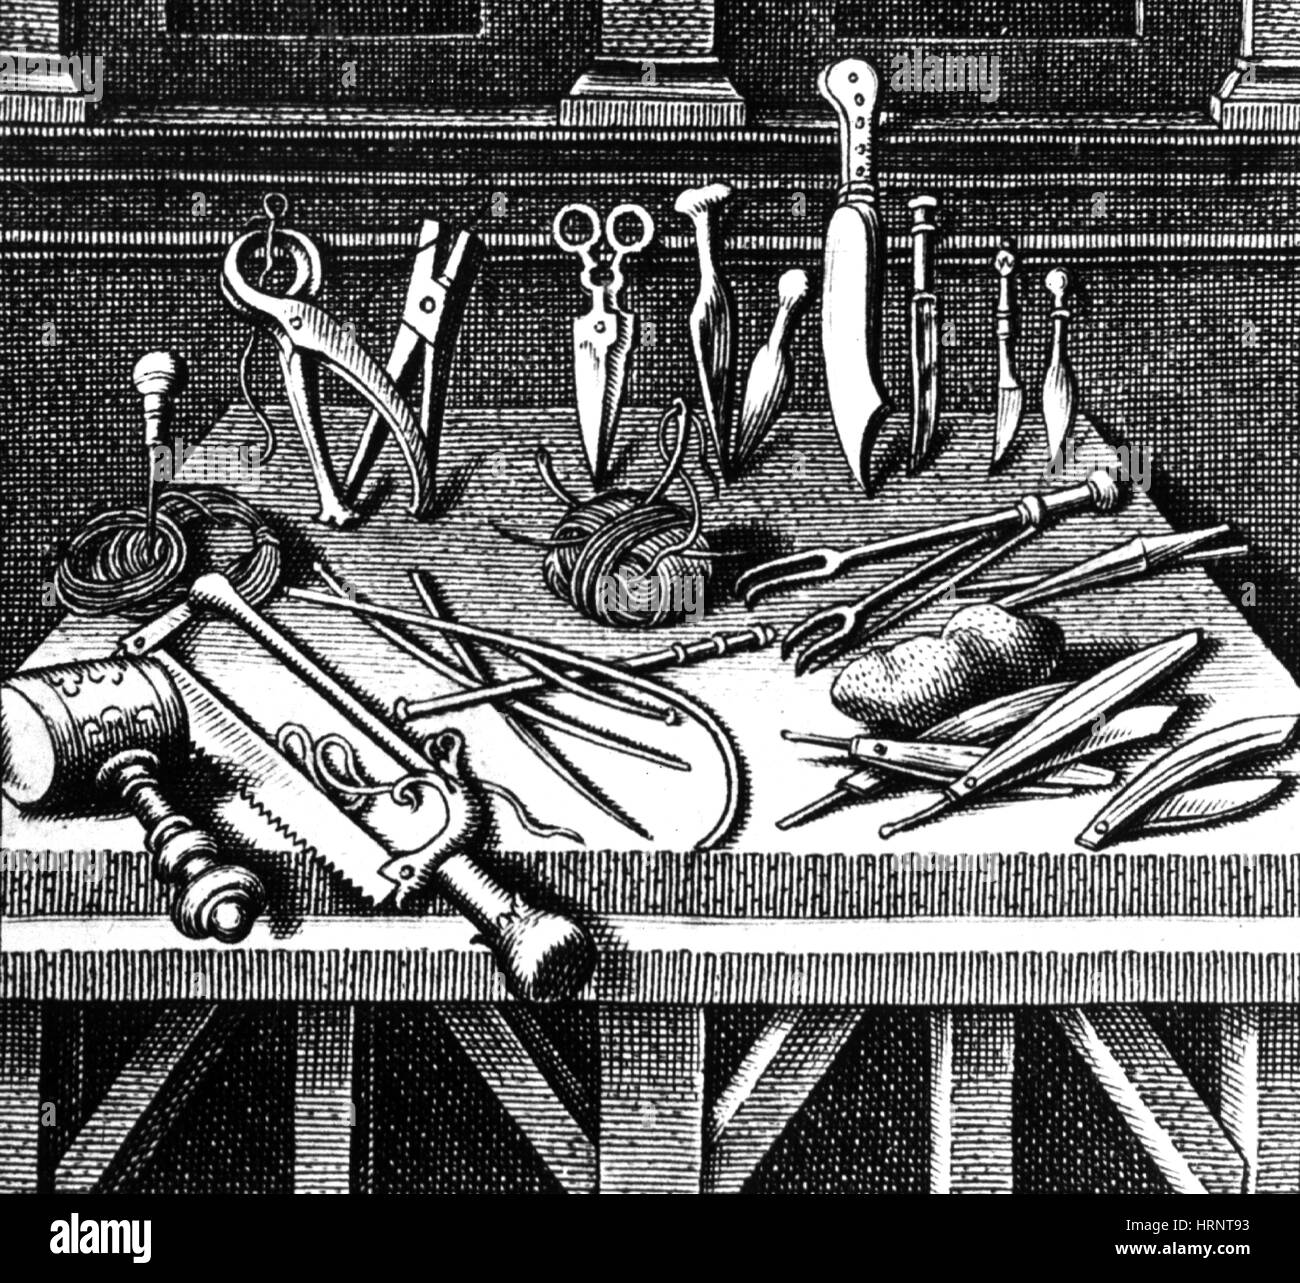 Chirurgische Geräte, 16. Jahrhundert Stockfoto